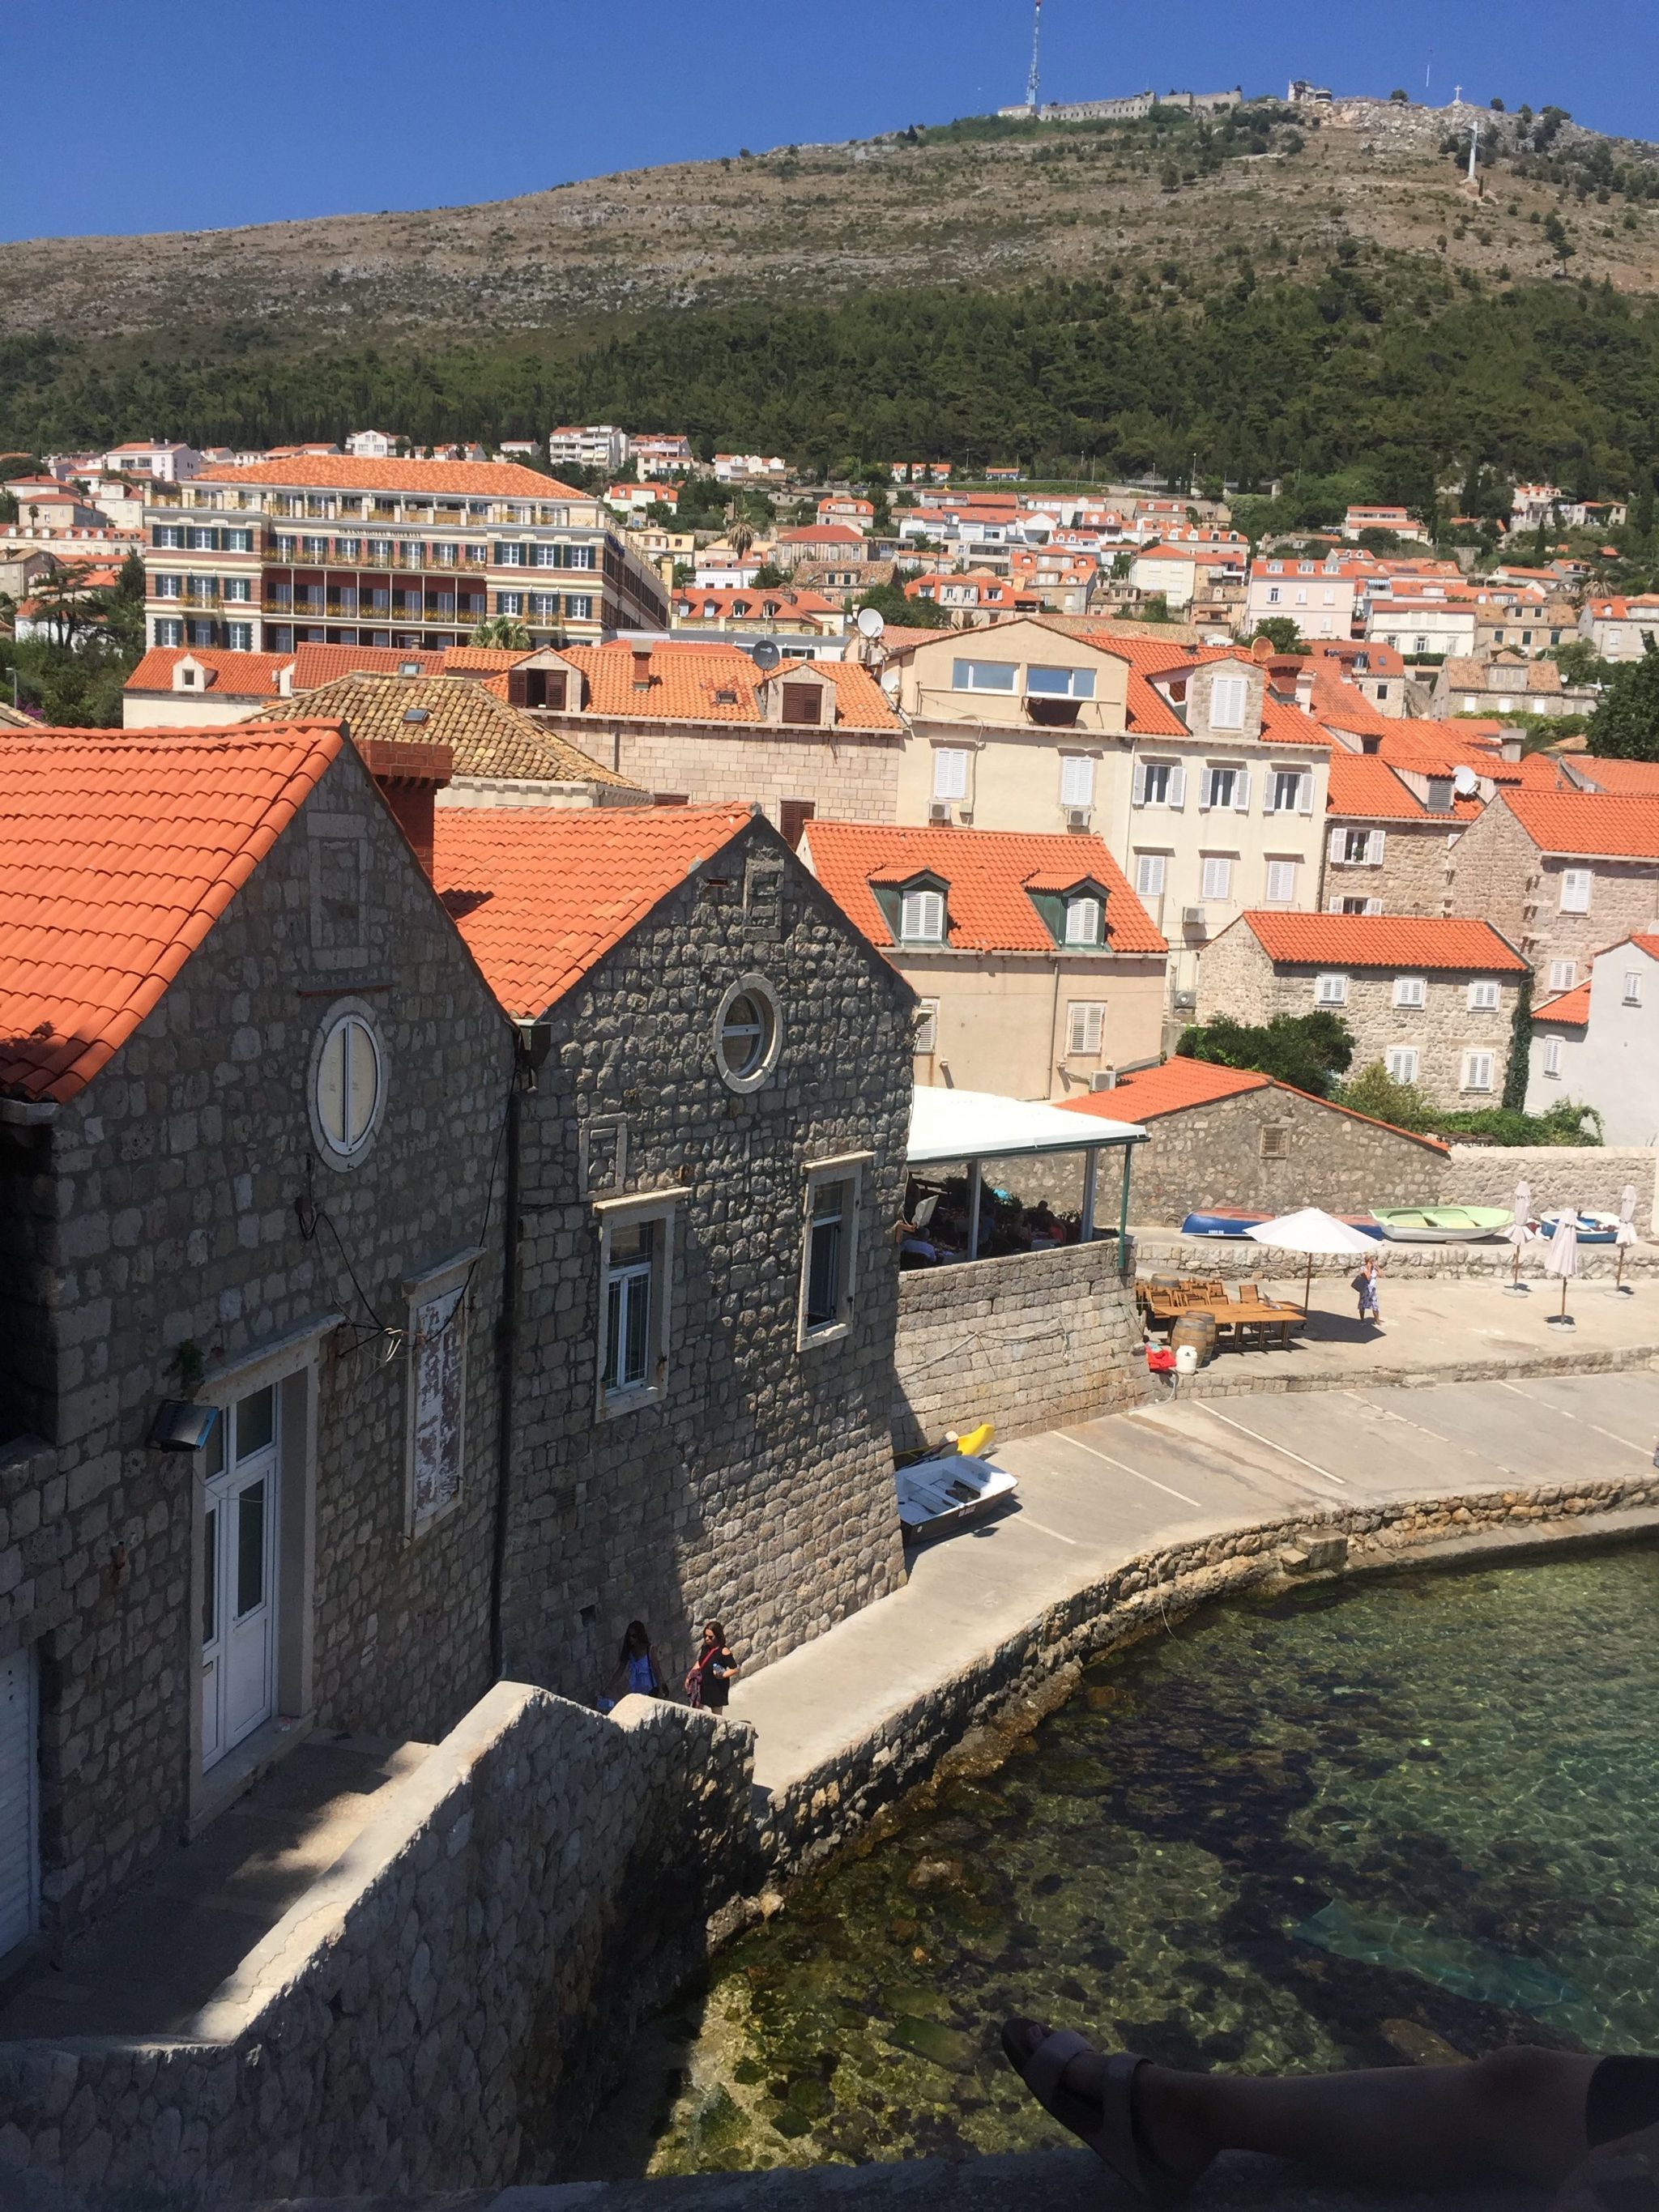 Visite de Dubrovnik: la perle de l’Adriatique!